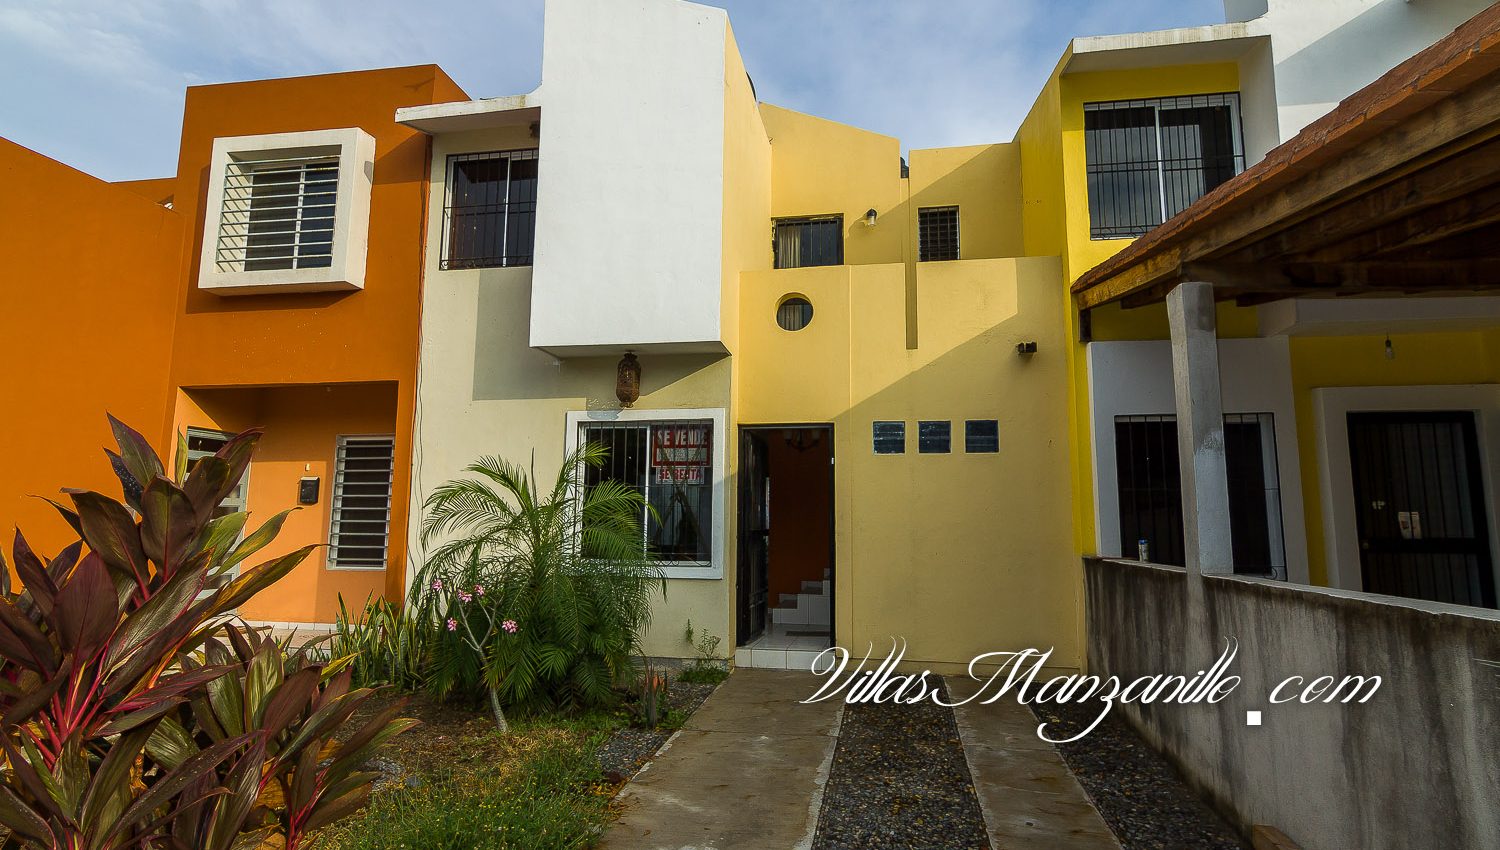 Se Renta For Rent Se Vende For Sale Casa en Villas del Pacifico Manzanillo Colima Mexico Casa Tiburon-13